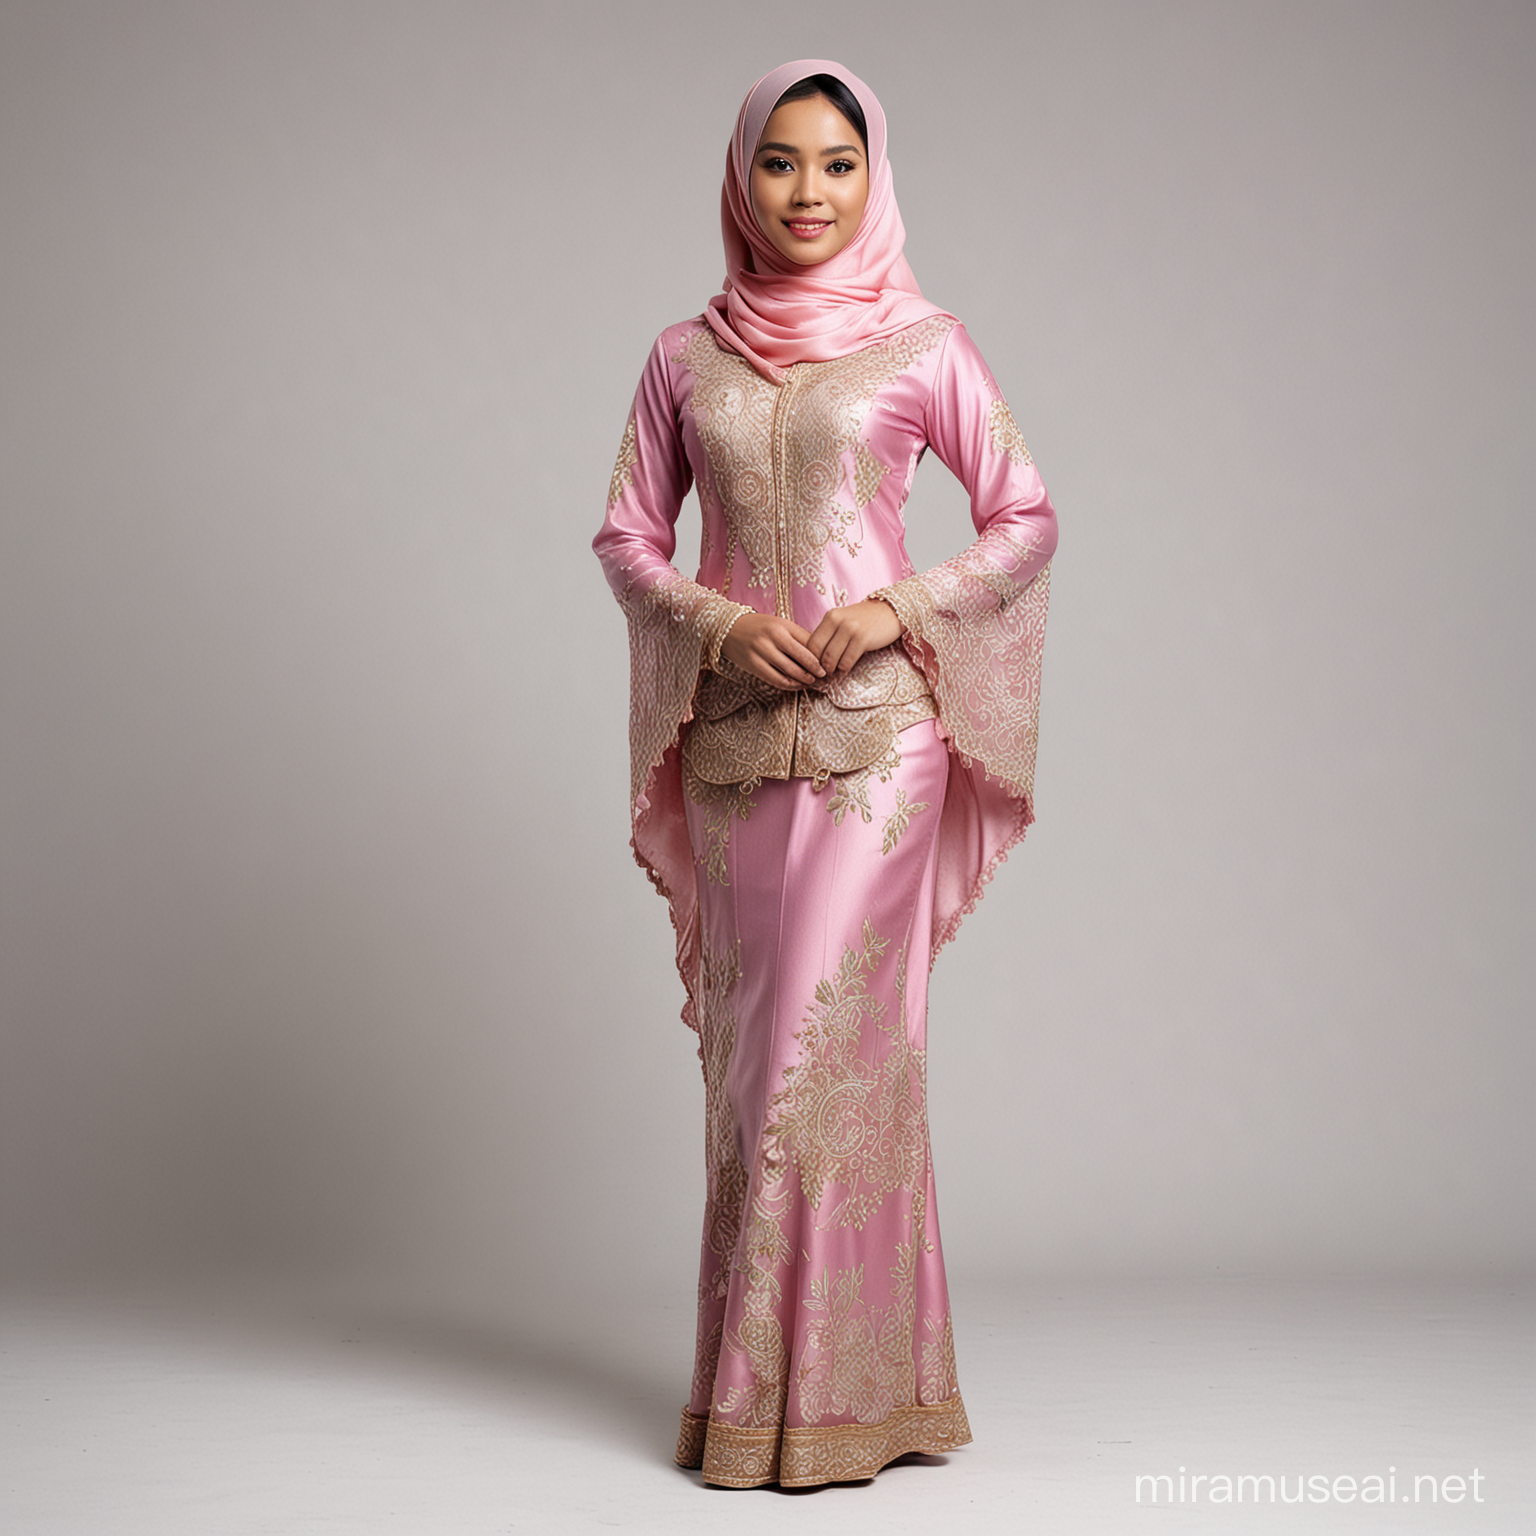 Malay Girl in Traditional Kebaya Elegant Hijab Fashion